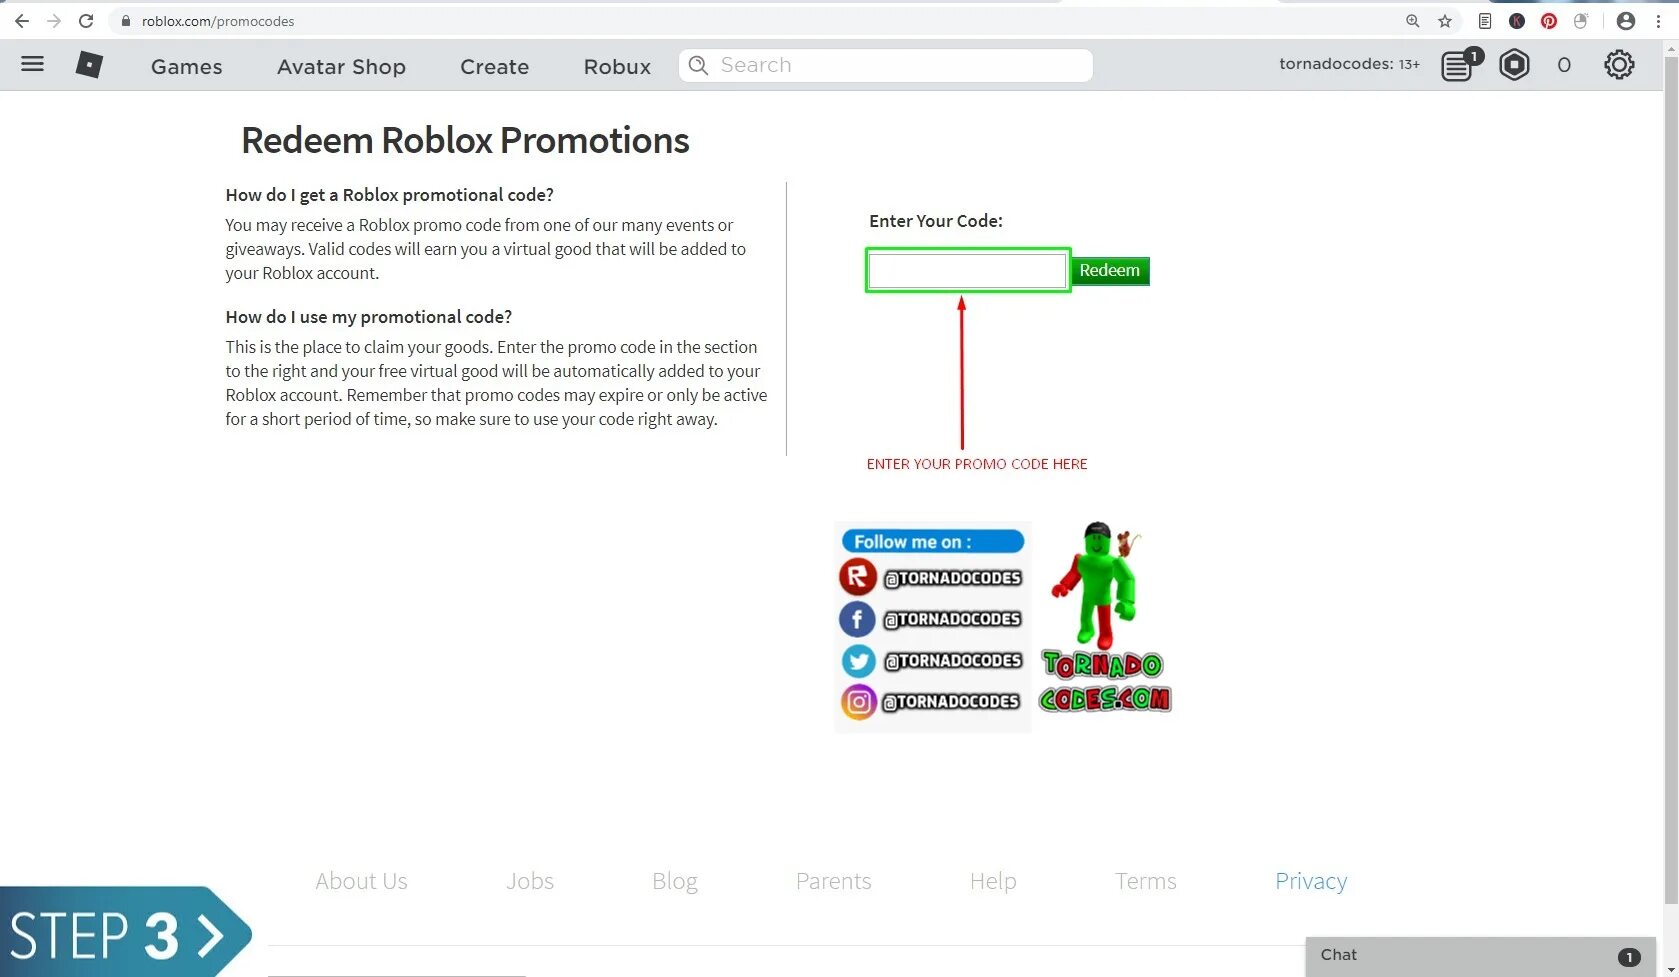 Your roblox code. Roblox Promo code. Roblox redeem. Коды в РОБЛОКС. Promocodes РОБЛОКС.